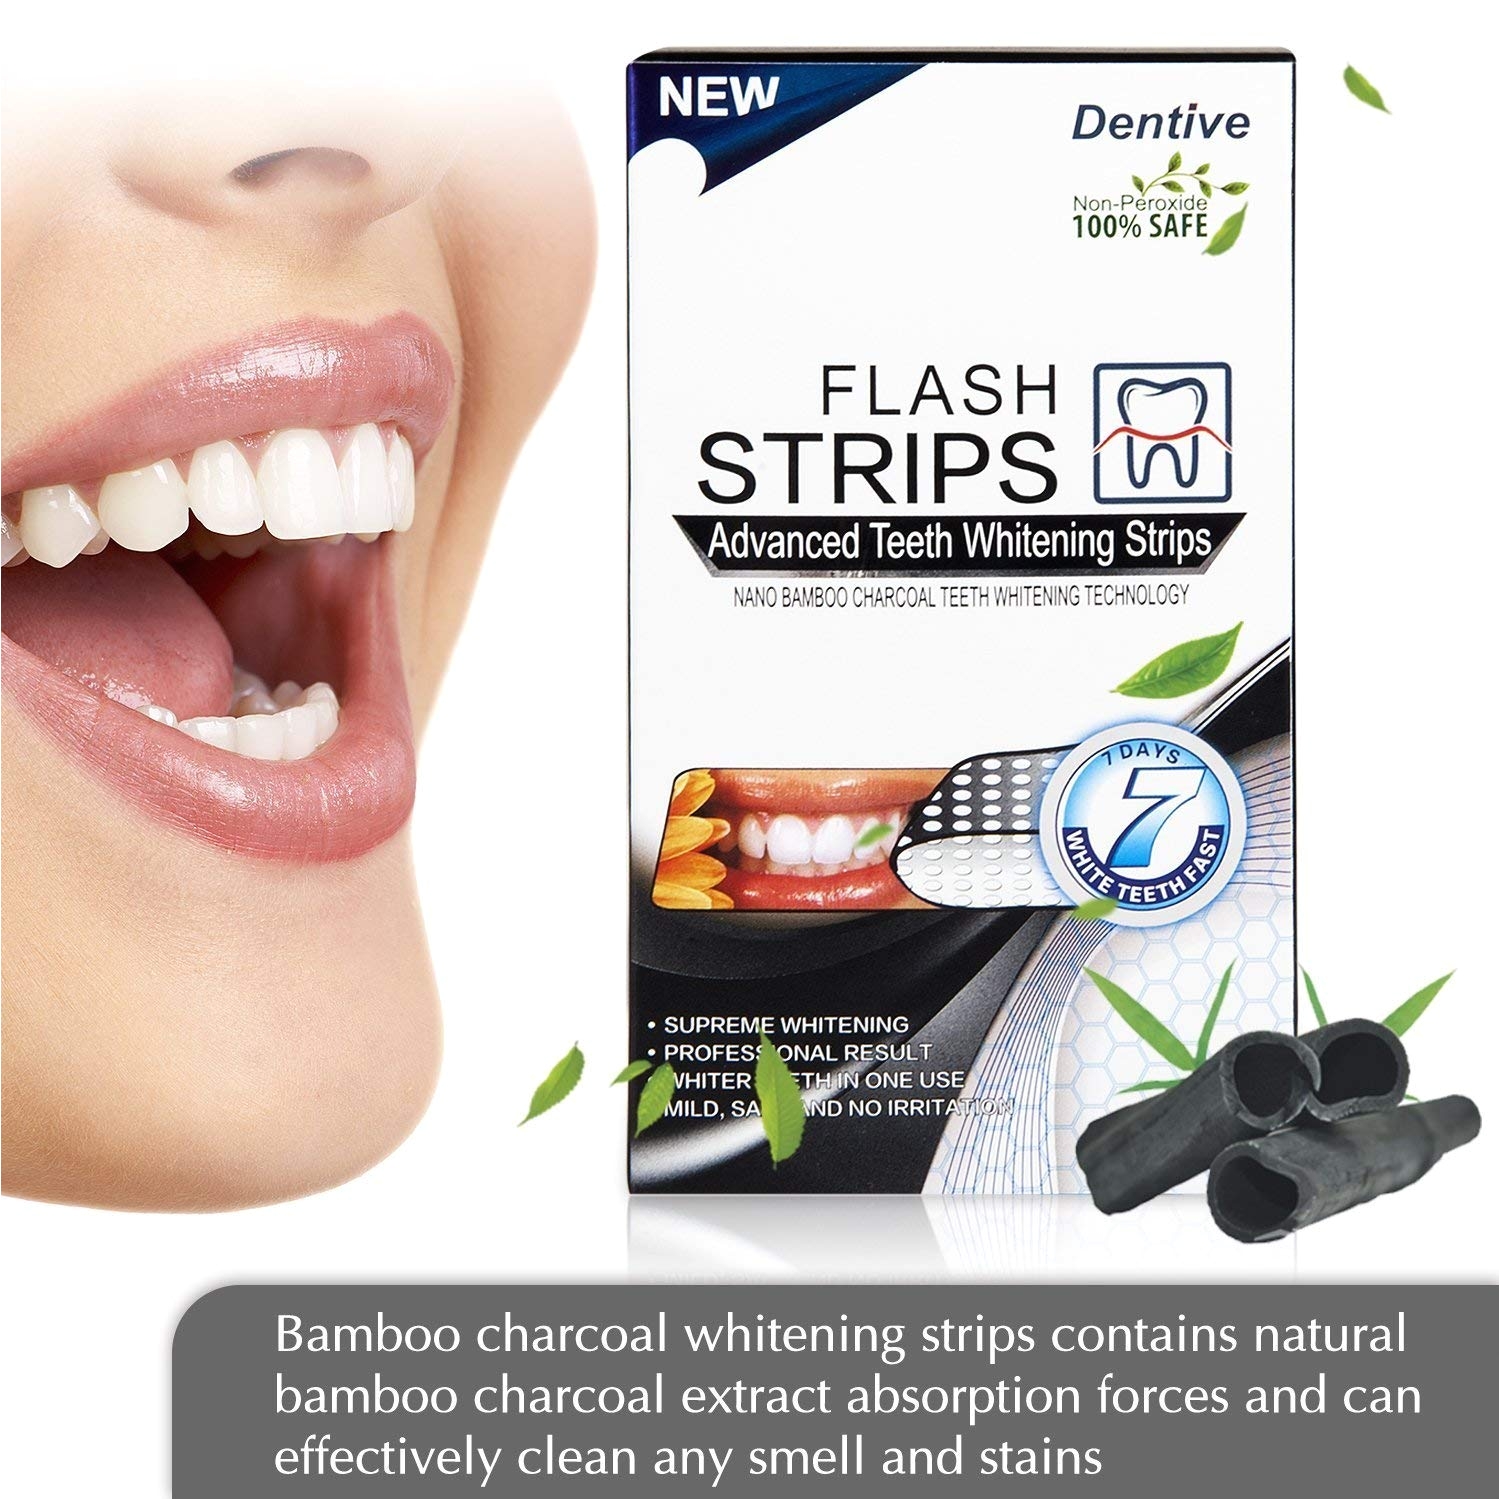 amazon com dentive white strips 28 teeth whitening strips w nano bamboo charcoal for professional effects 14 treatments flash strip beauty